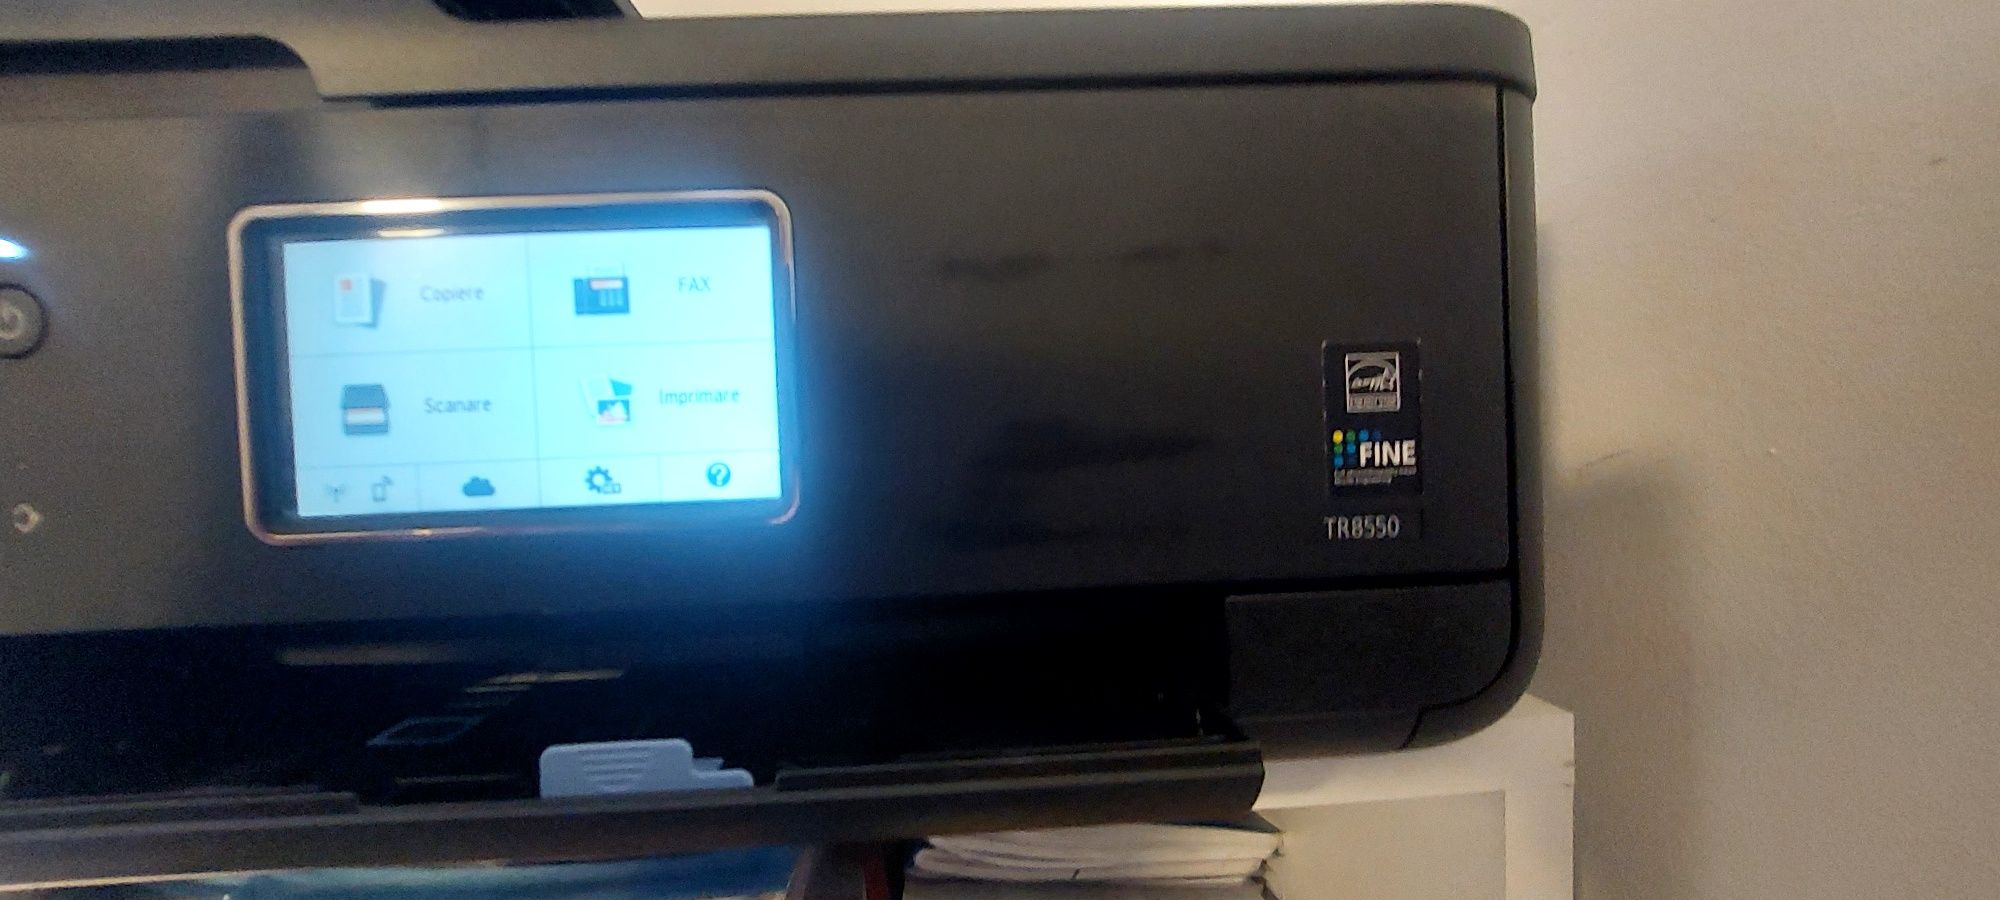 imprimanta / scaner multifuncționala CANON TR 8550